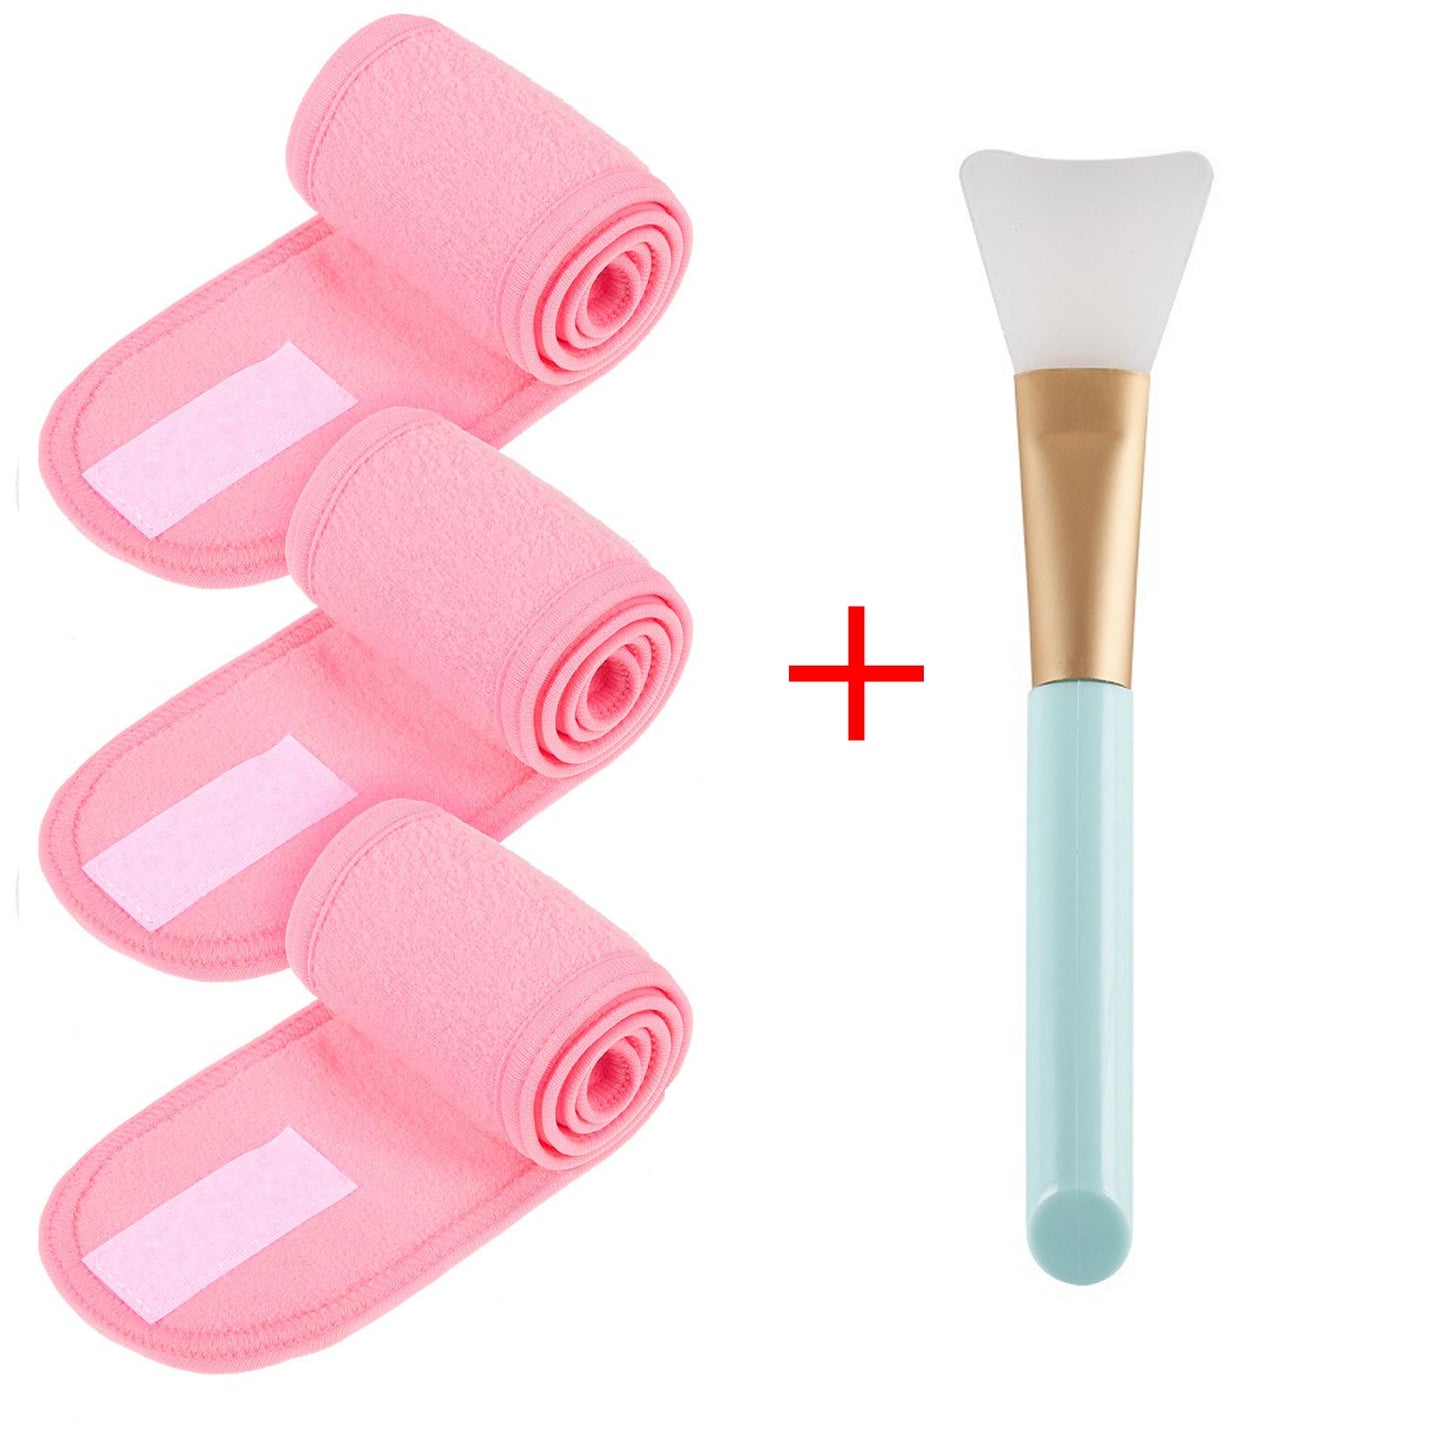 Pink Adjustable Stretchy Face-Wash Spa Make-Up Headband And Mask Brush